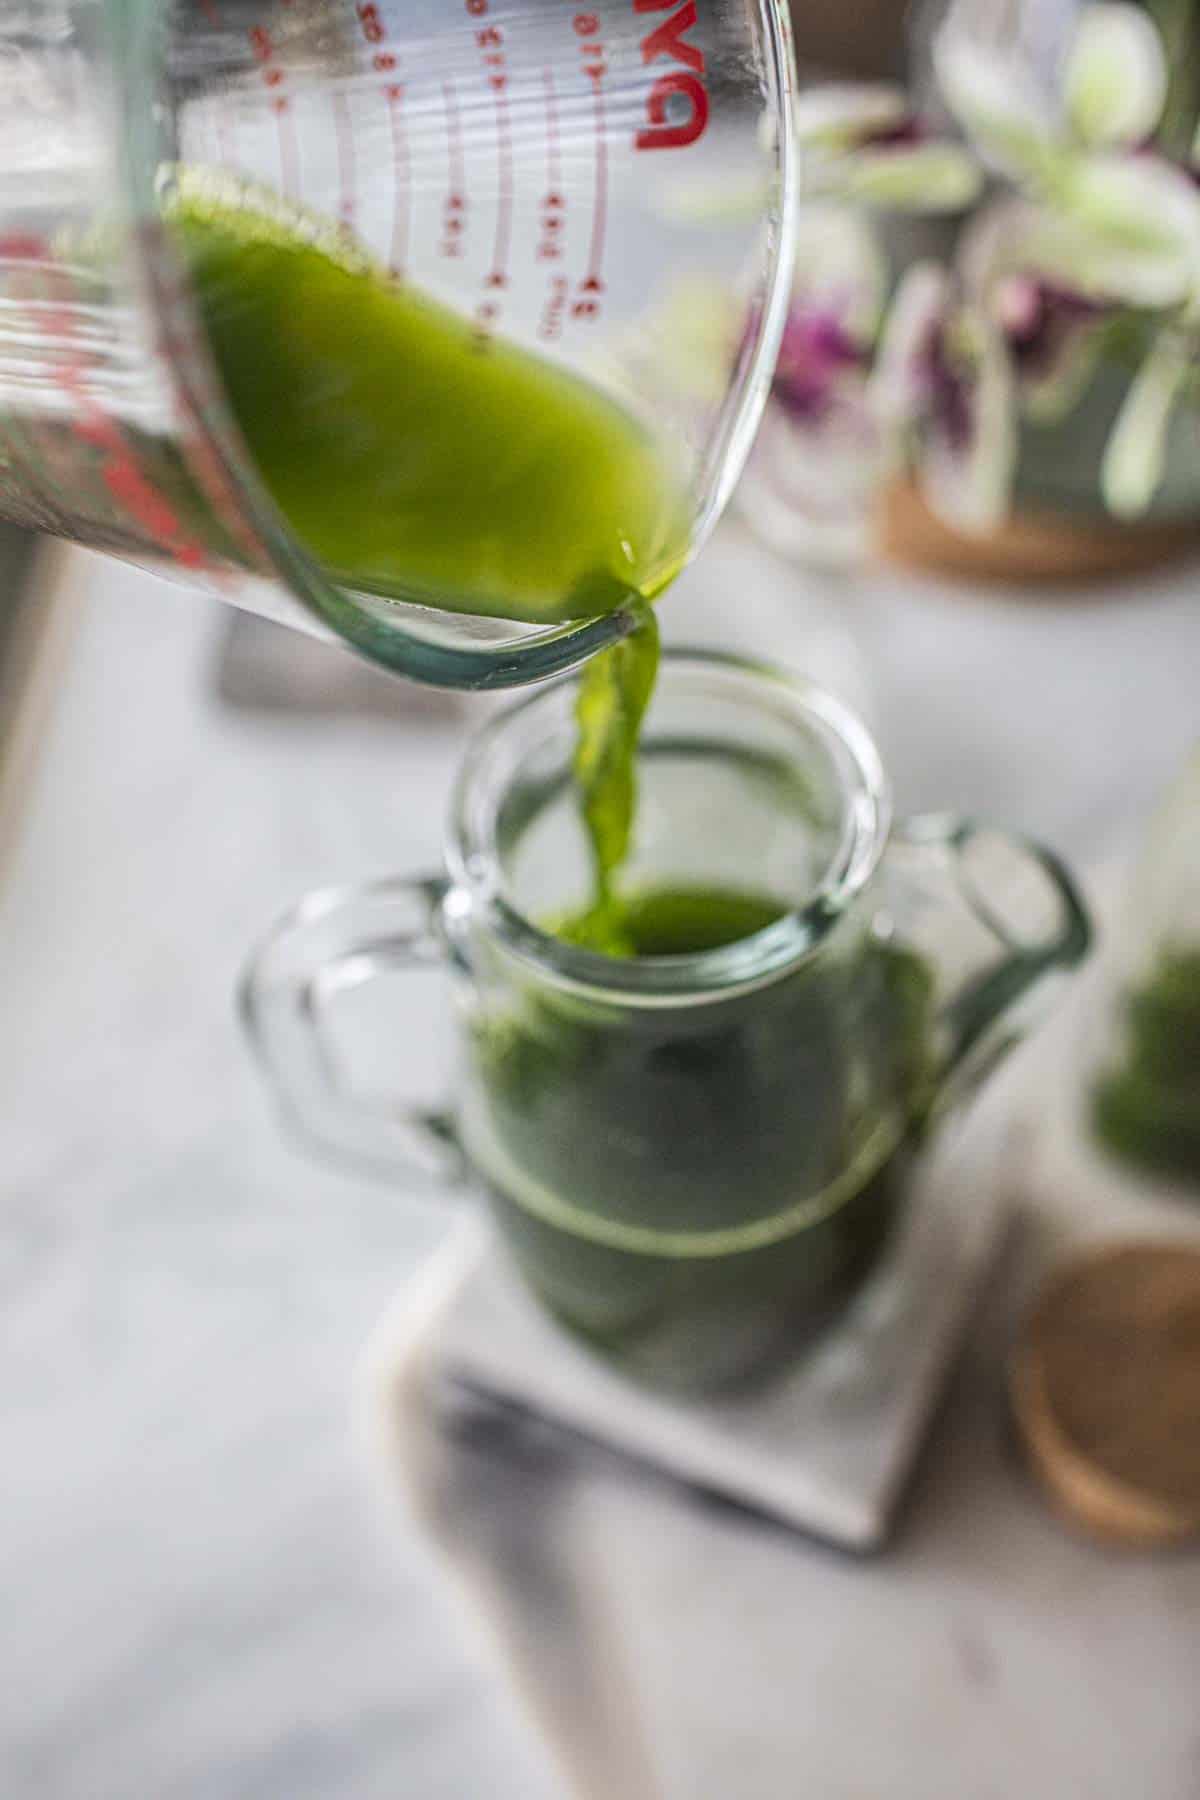 Green pandan liquid pouring into a glass vase. 